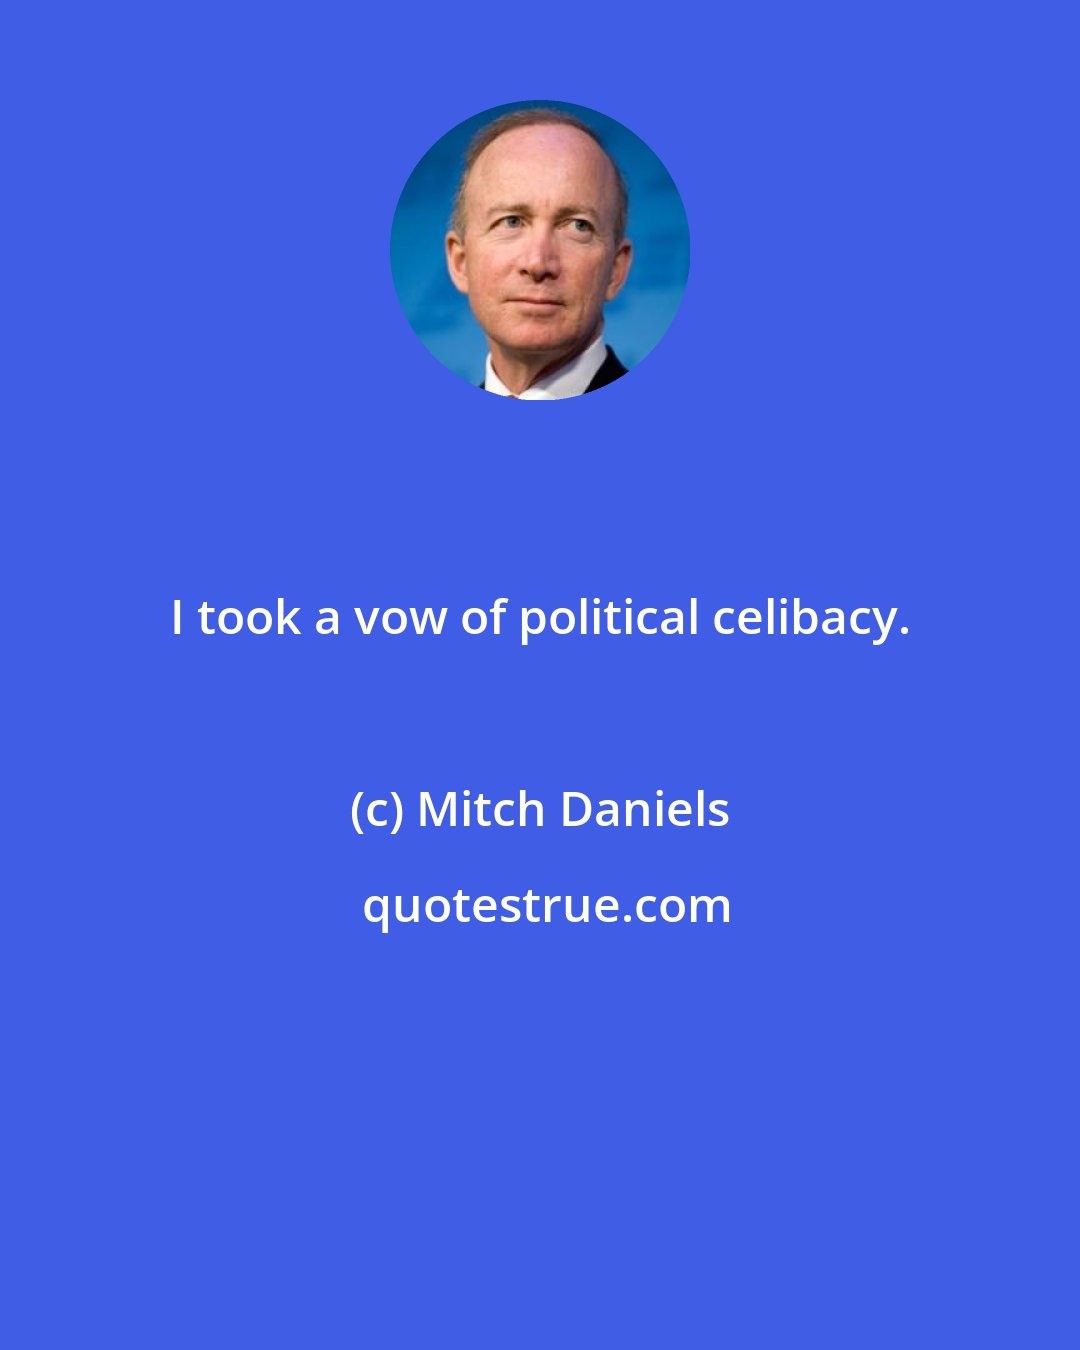 Mitch Daniels: I took a vow of political celibacy.